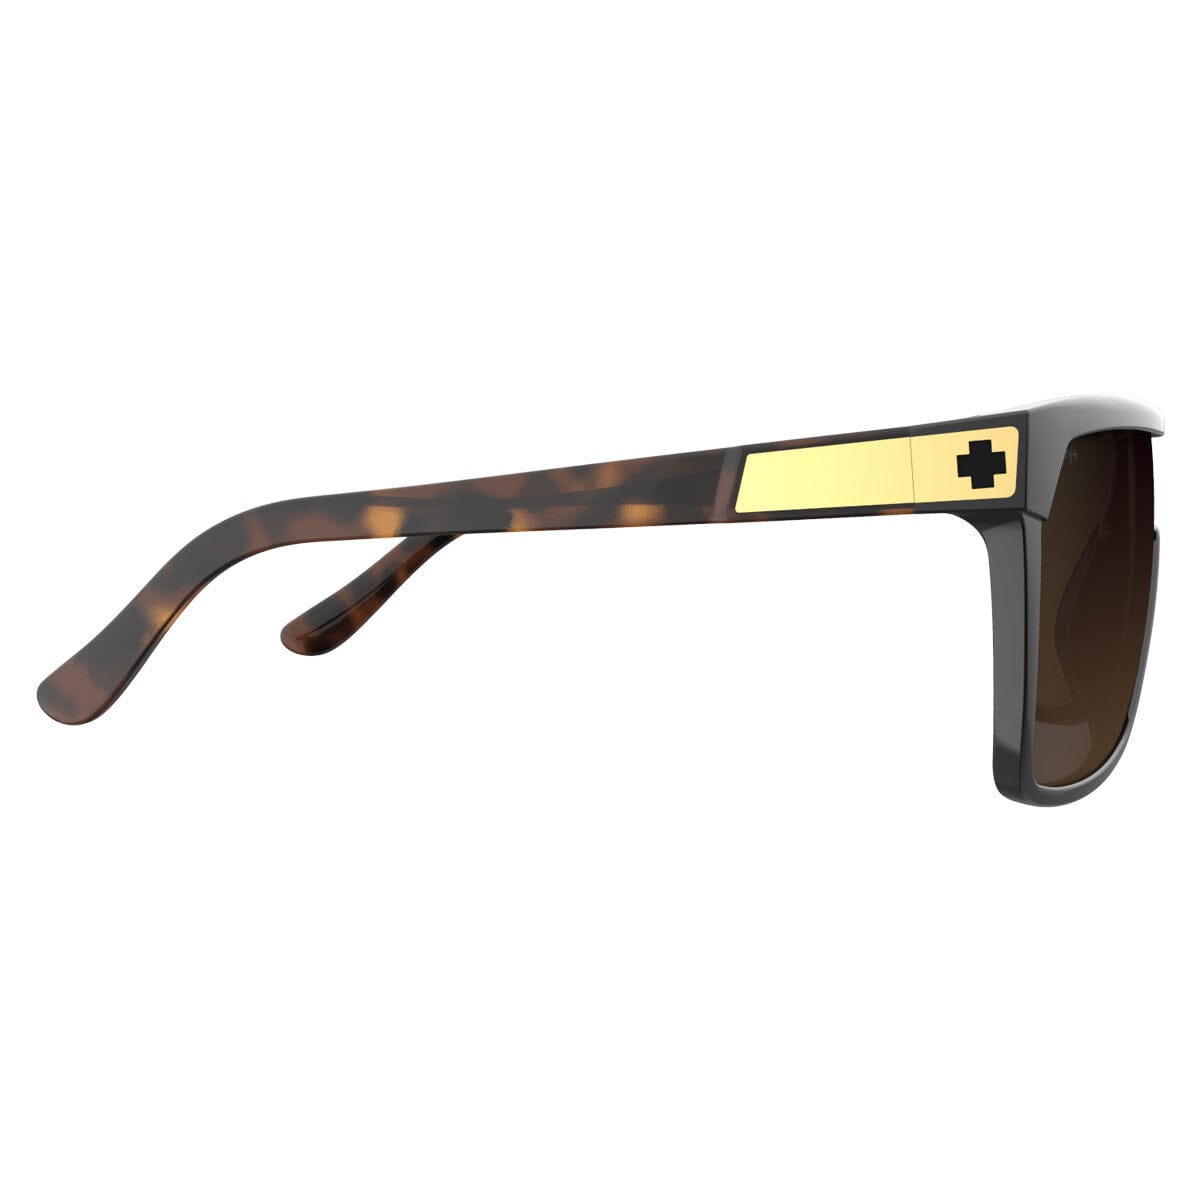 SPY Flynn Black/Honey Tort - Happy Dark Brown Fade Sunglasses Sunglasses Spy 